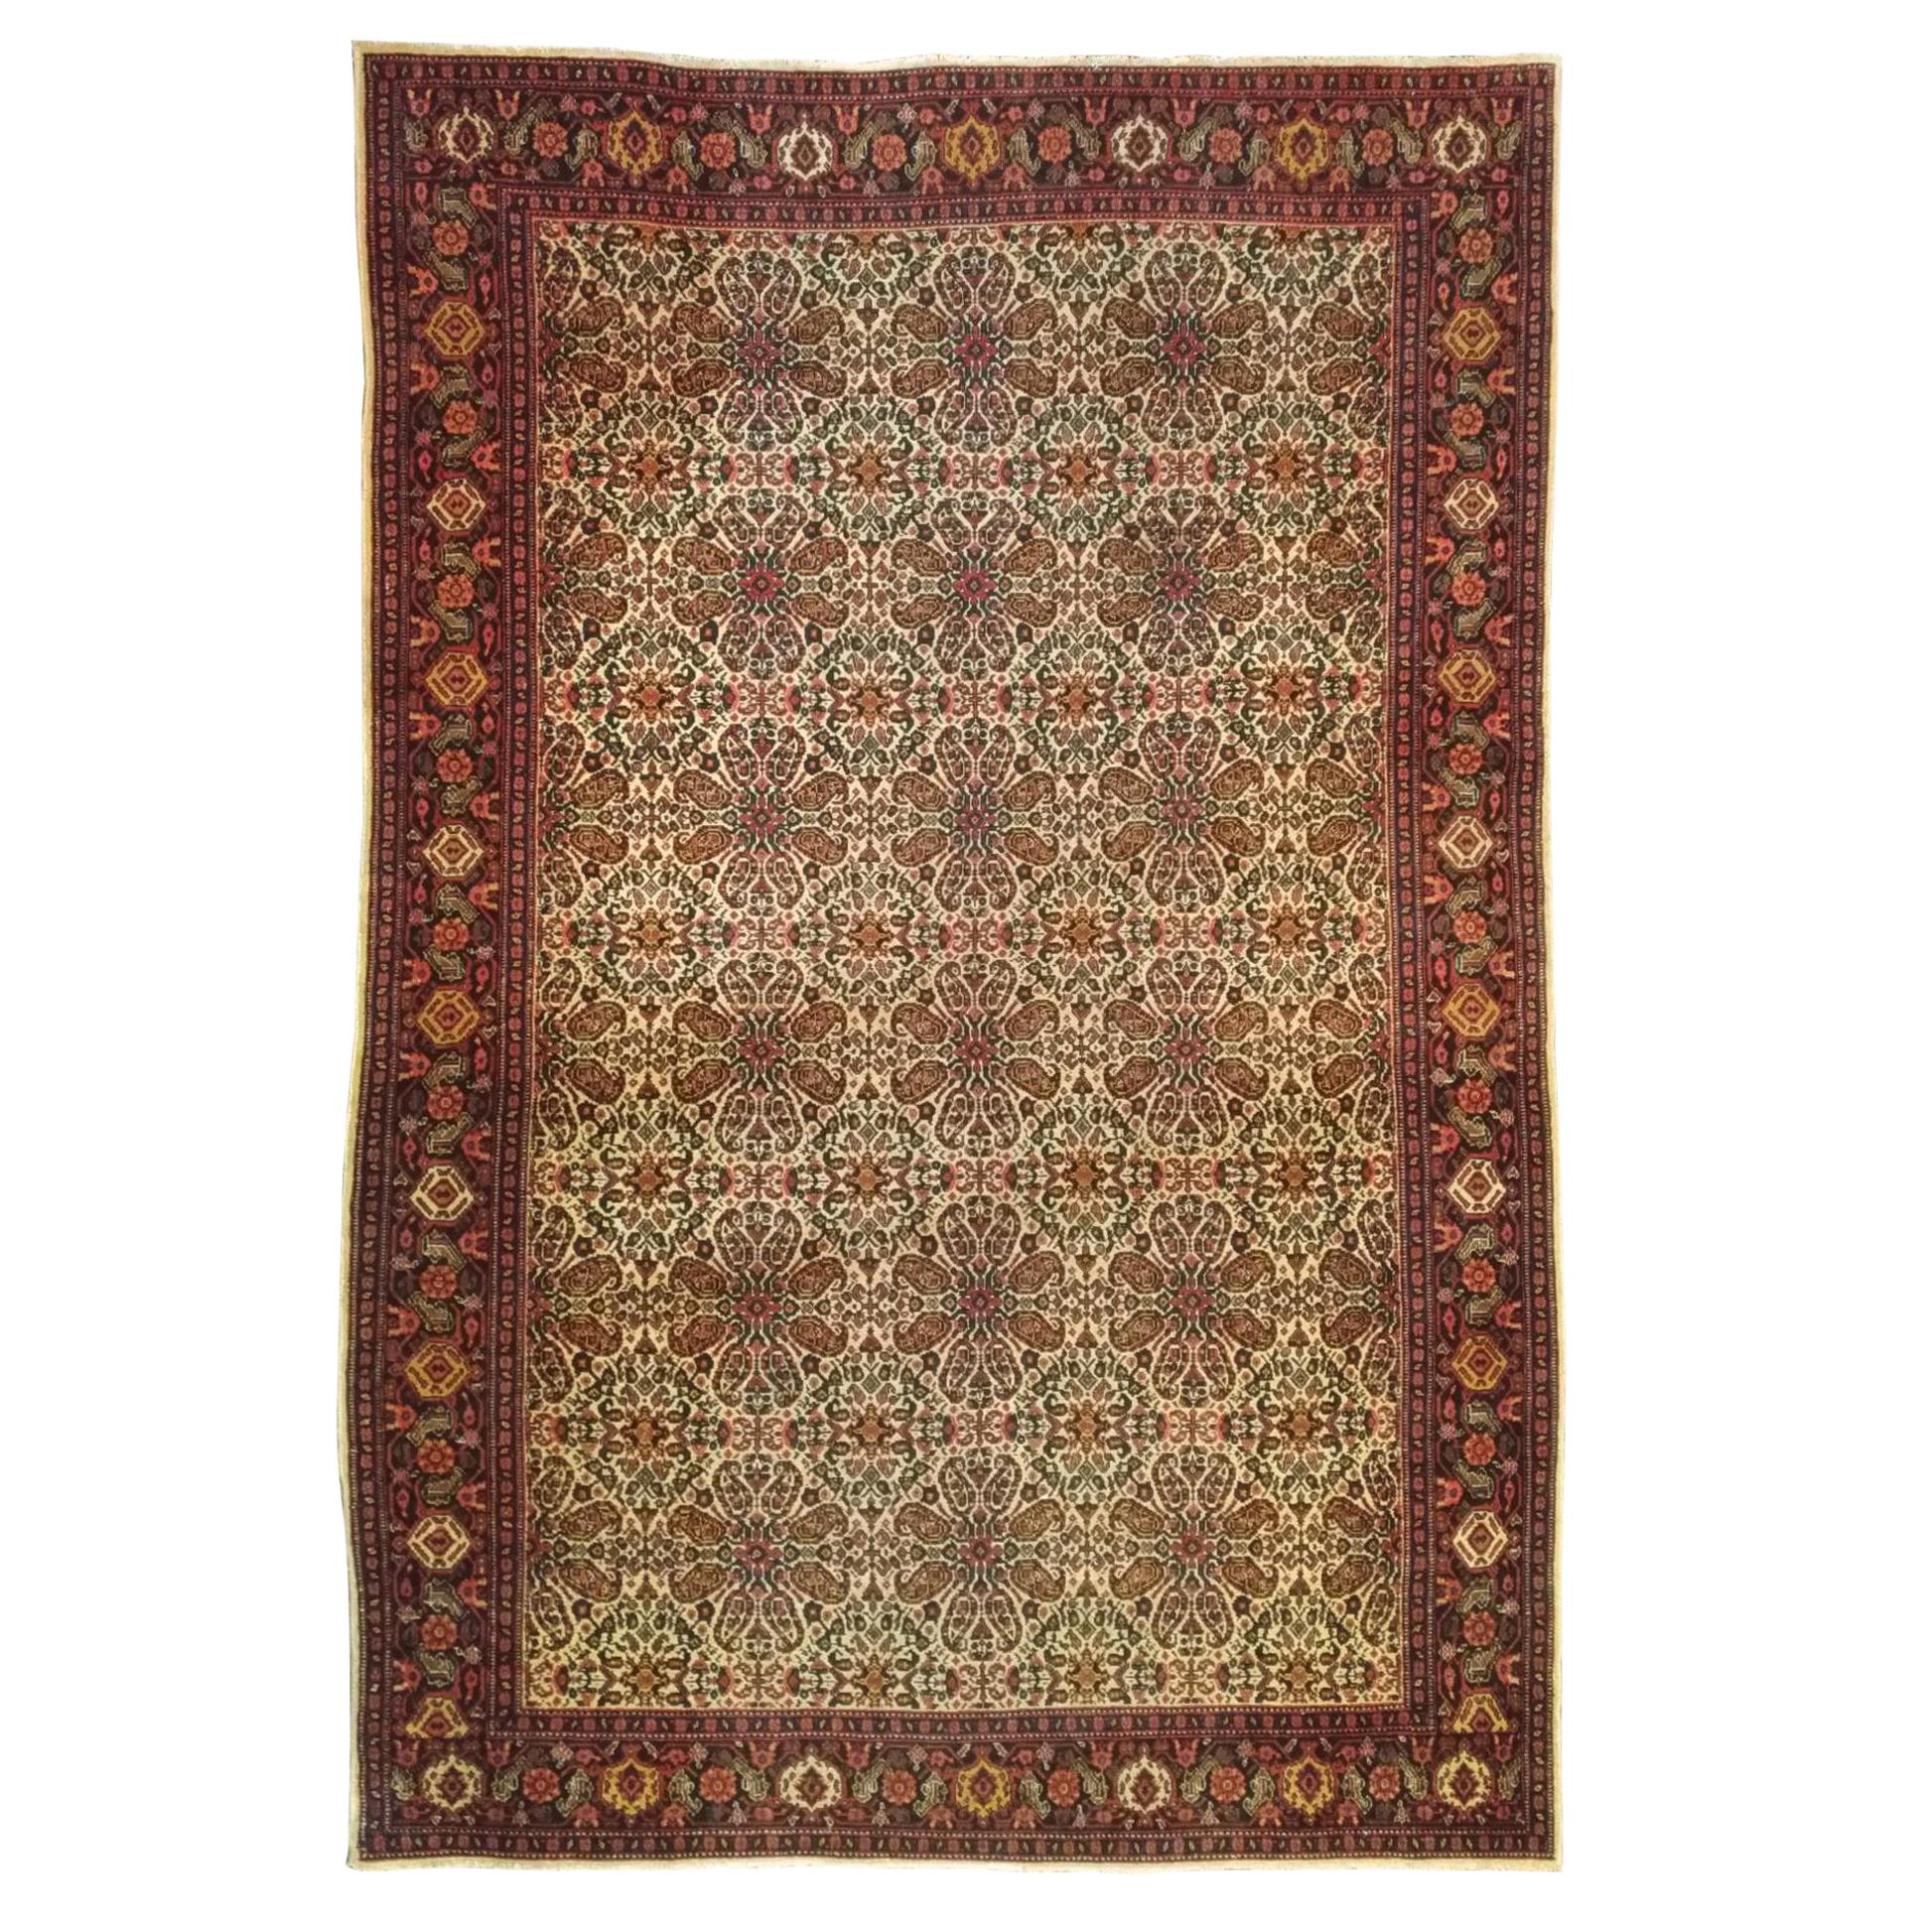 1023 - Magnificent 19th Century Kurdish Senneh Carpet